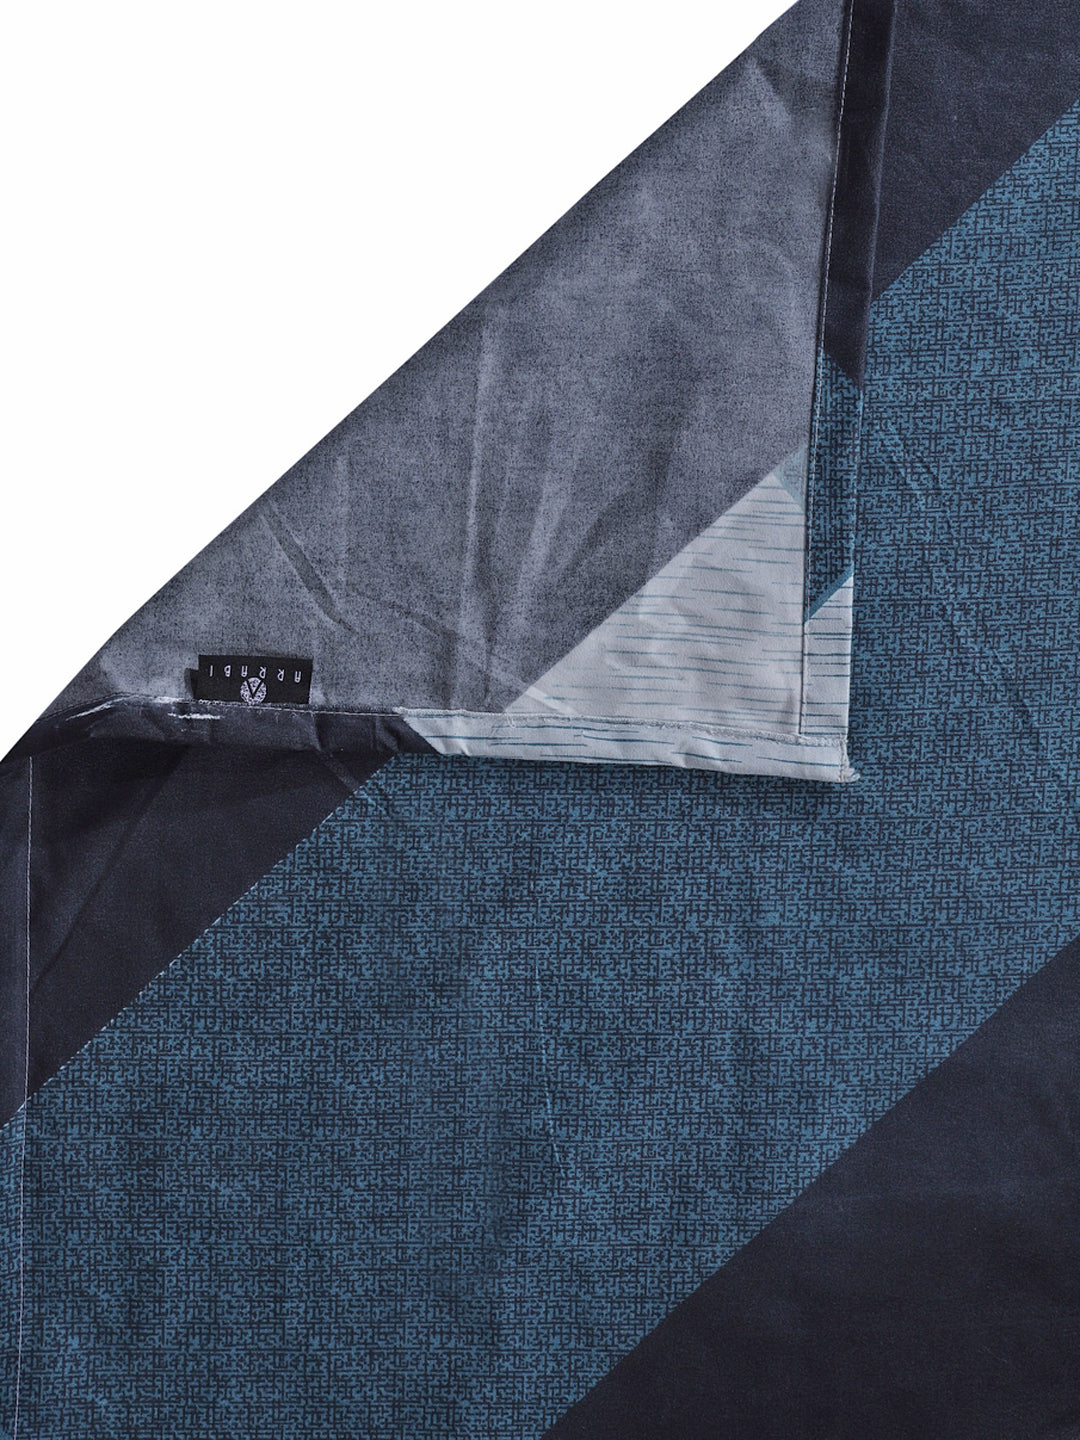 Arrabi Multi Geometric TC Cotton Blend Double Size Comforter Bedding Set with 2 Pillow Cover